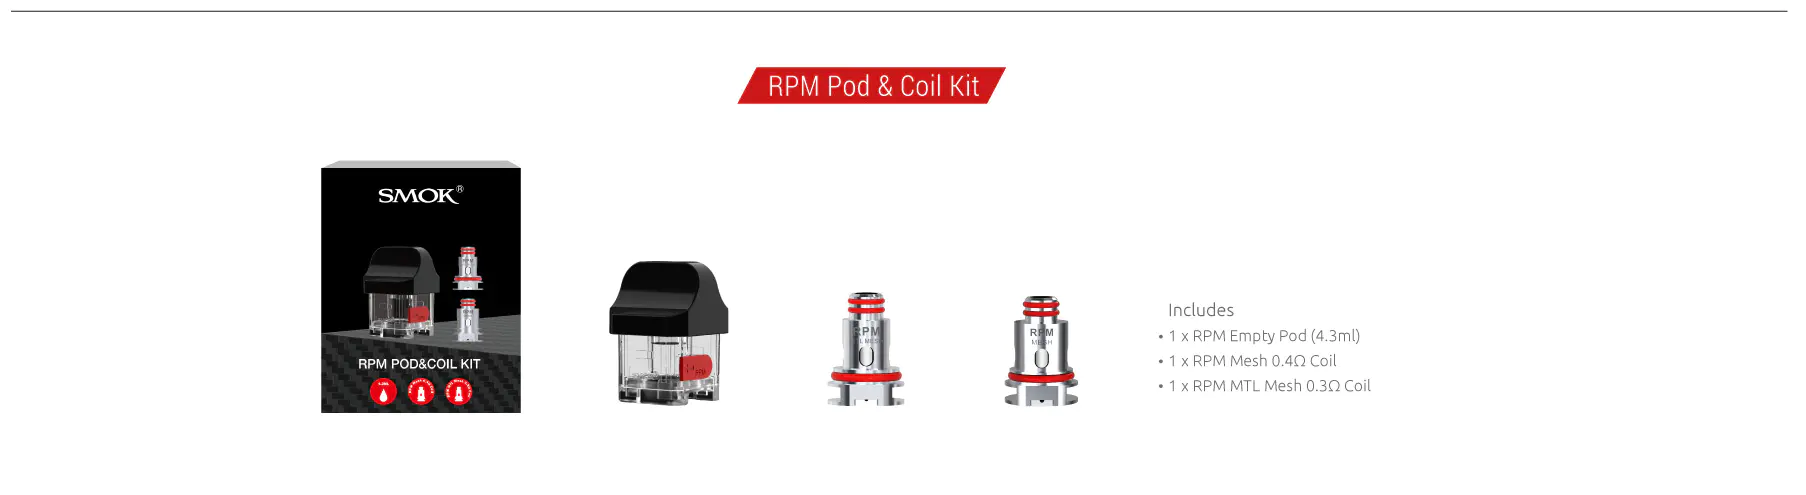 RPM Pod & Coil Kit for SMOK RPM40 Kit